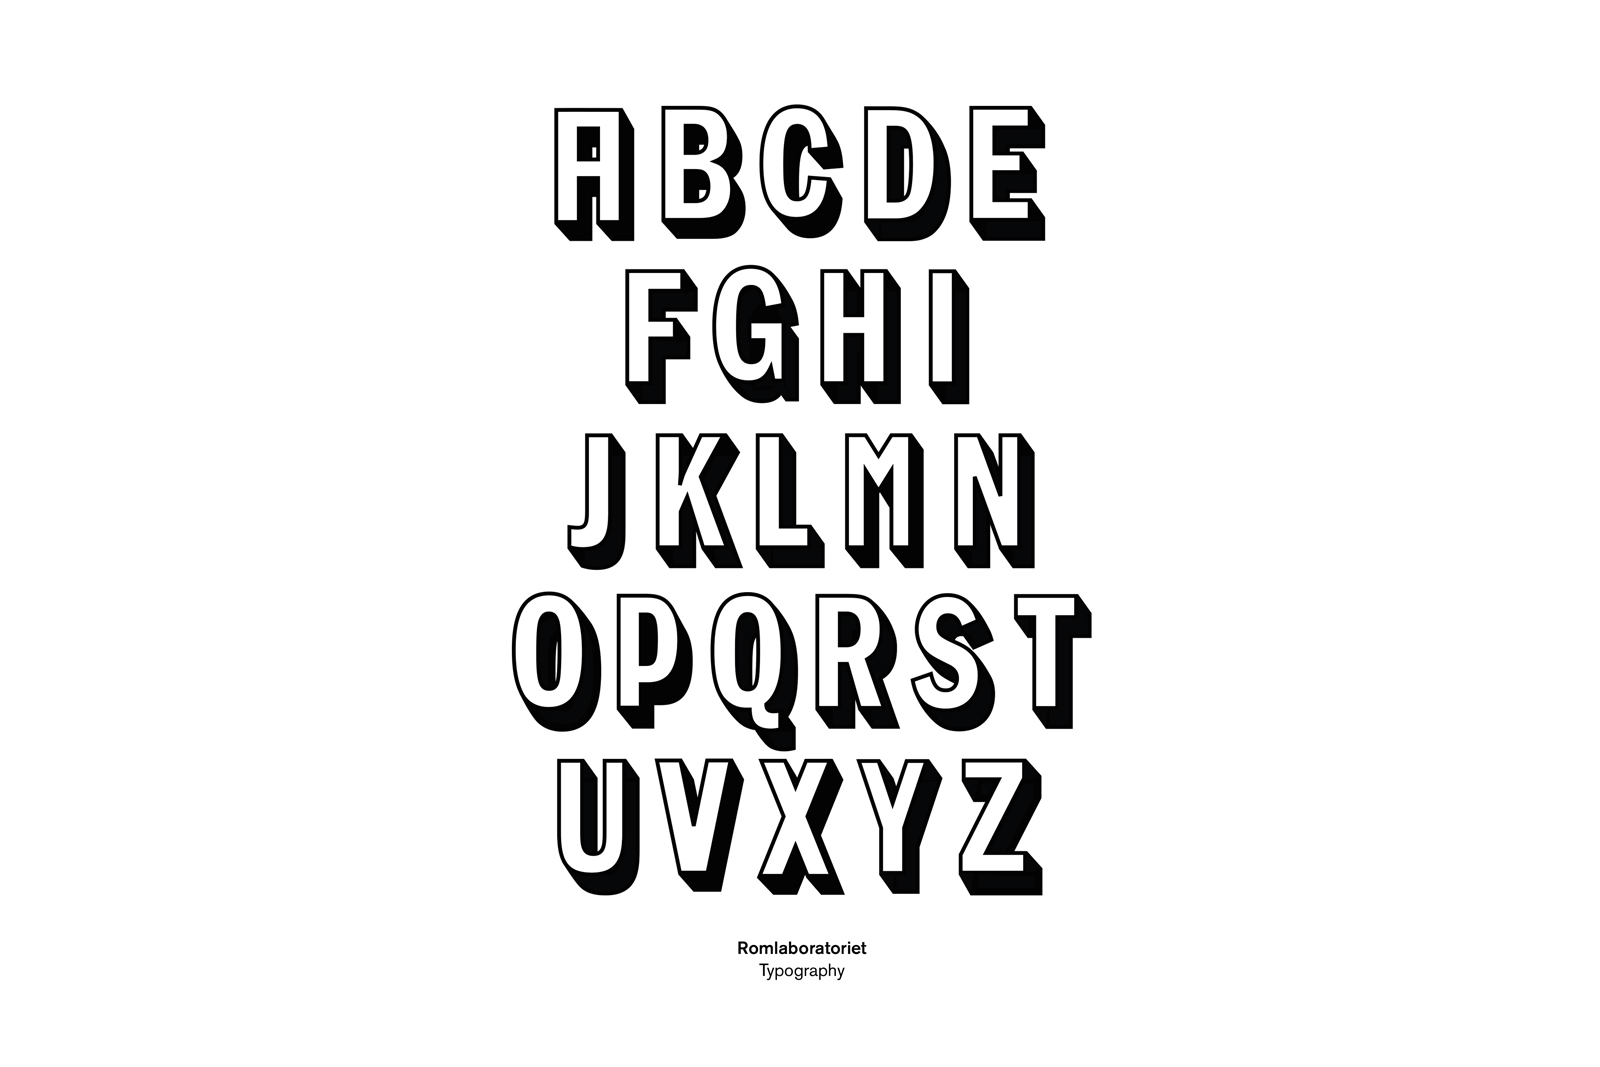 graphisme design Typographie identity bleed oslo architect poster 